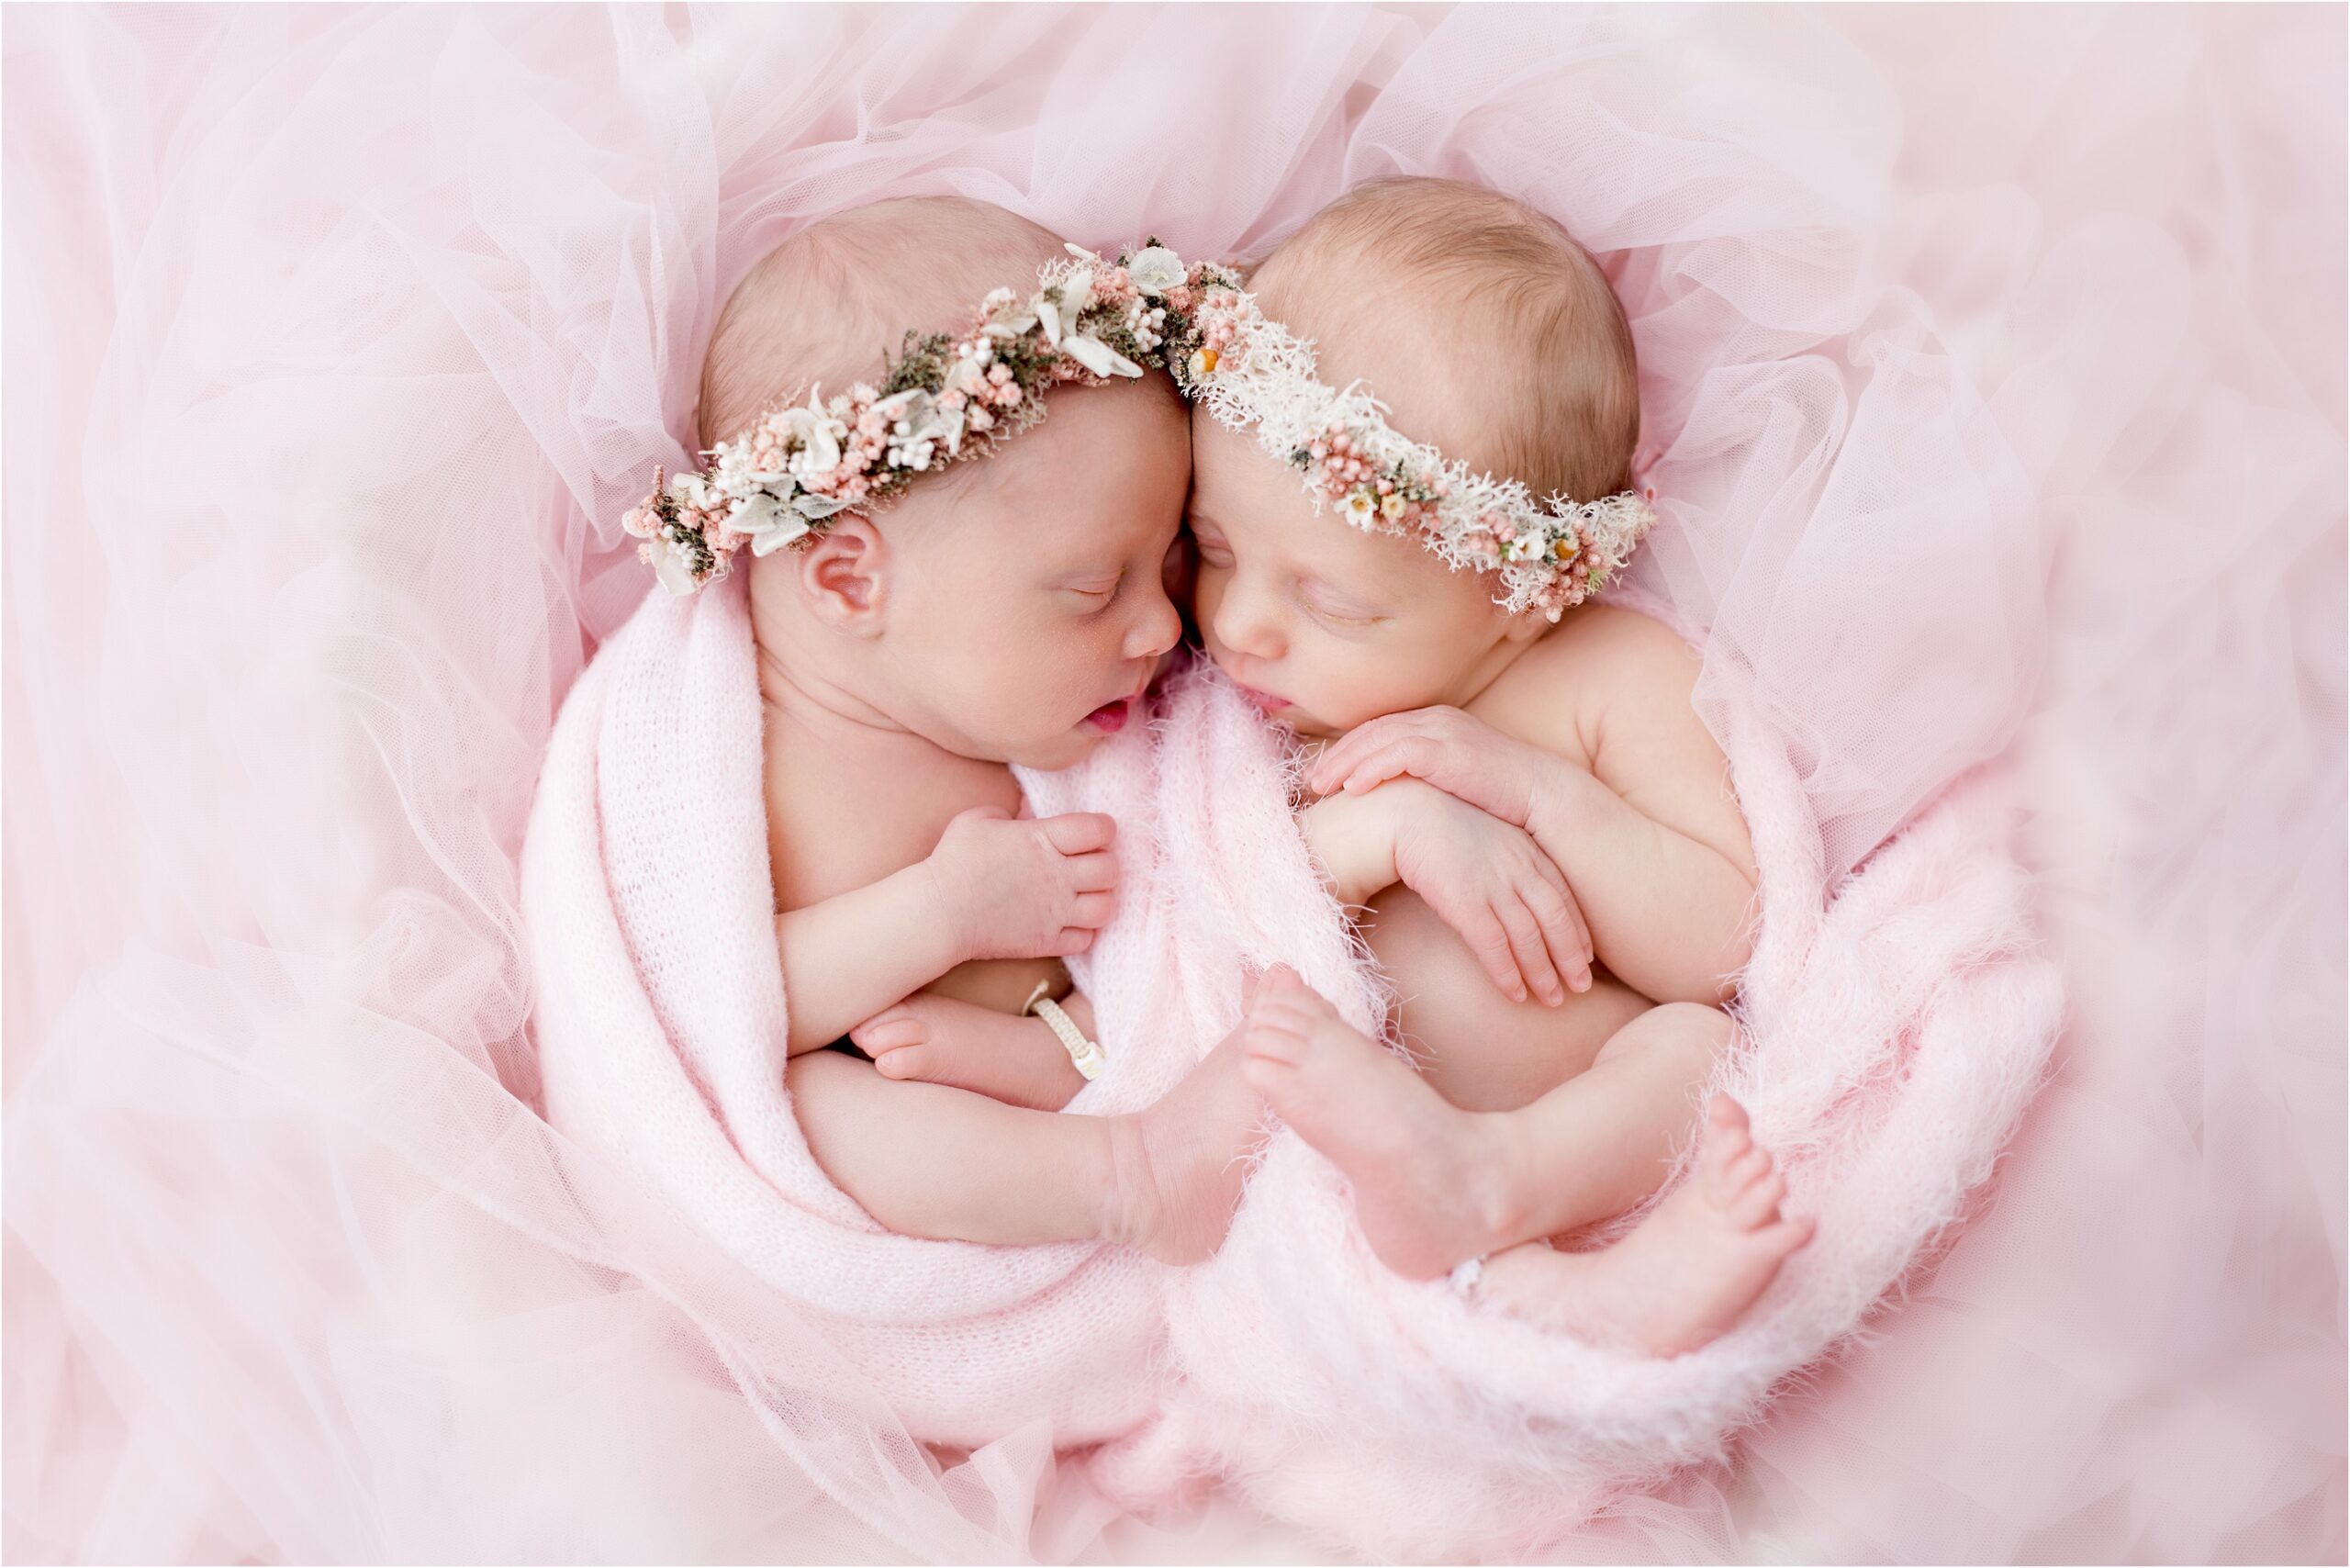 edmonton newborn photographer, newborn photos st albert, light and airy newborn photos, nc photography, yeg photographer, twin newborn photos, girl twin newborn photos